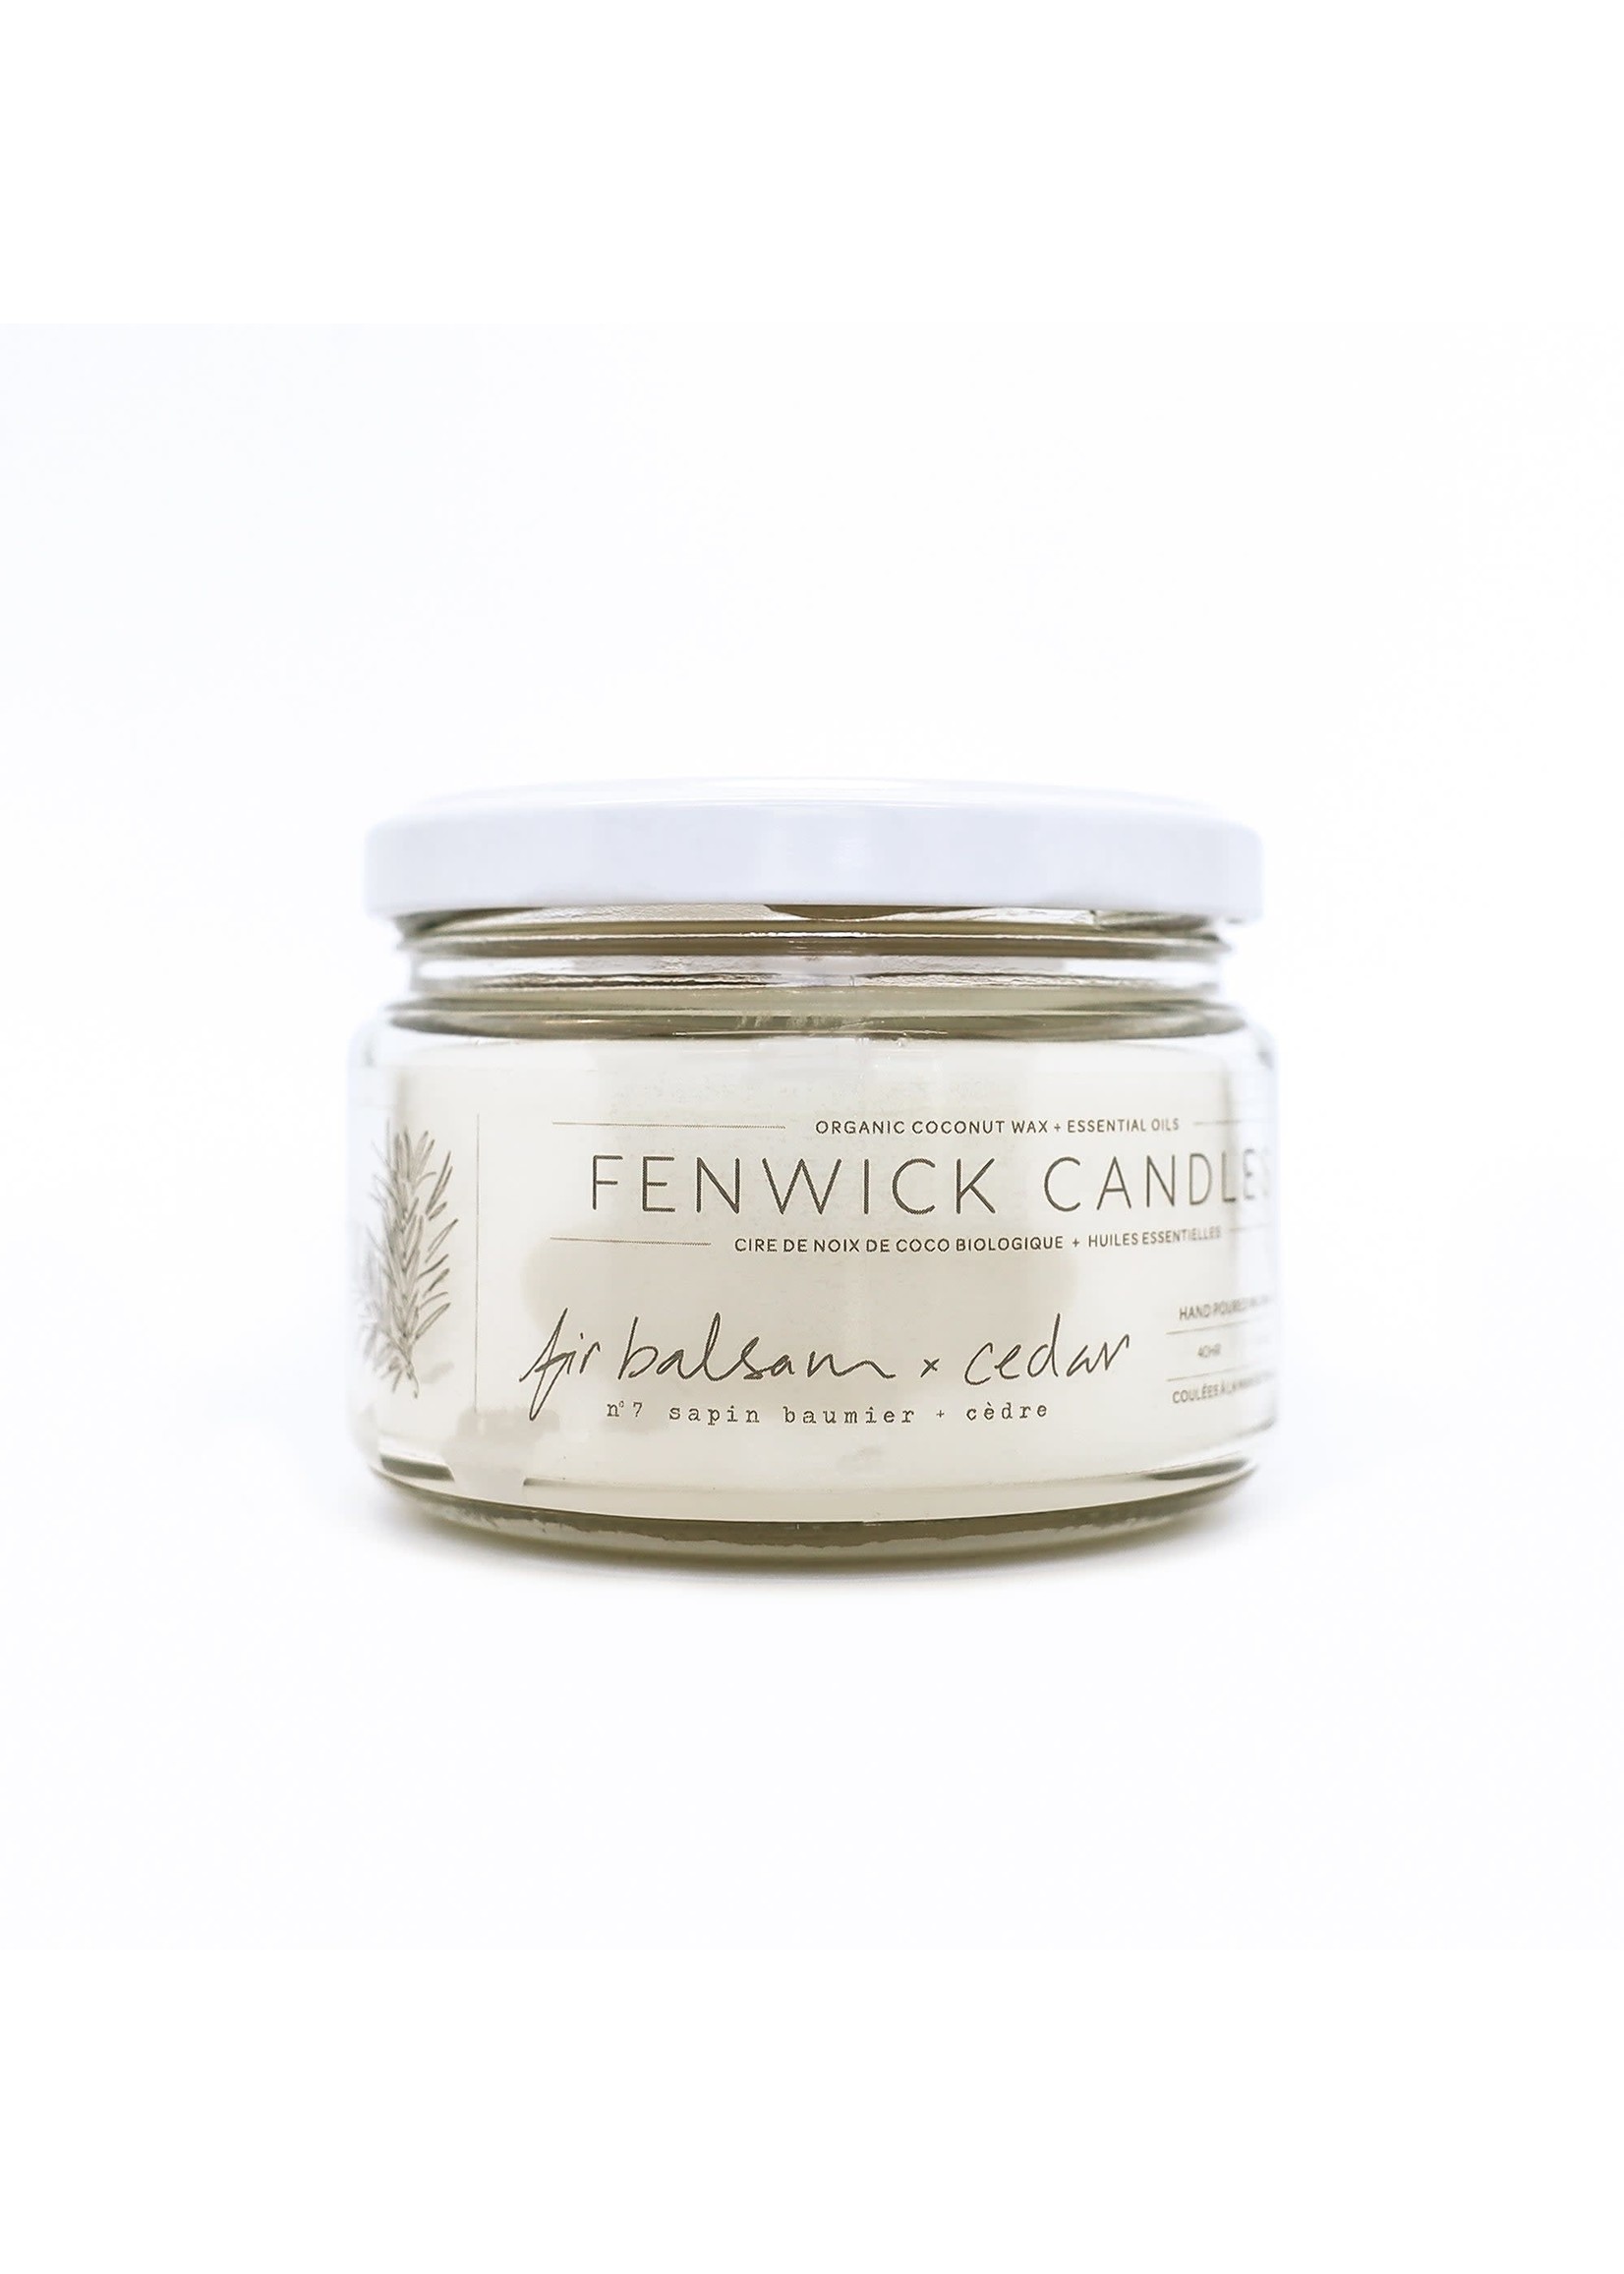 Fenwick Candles Fendwick - no. 7 baslam x cedar